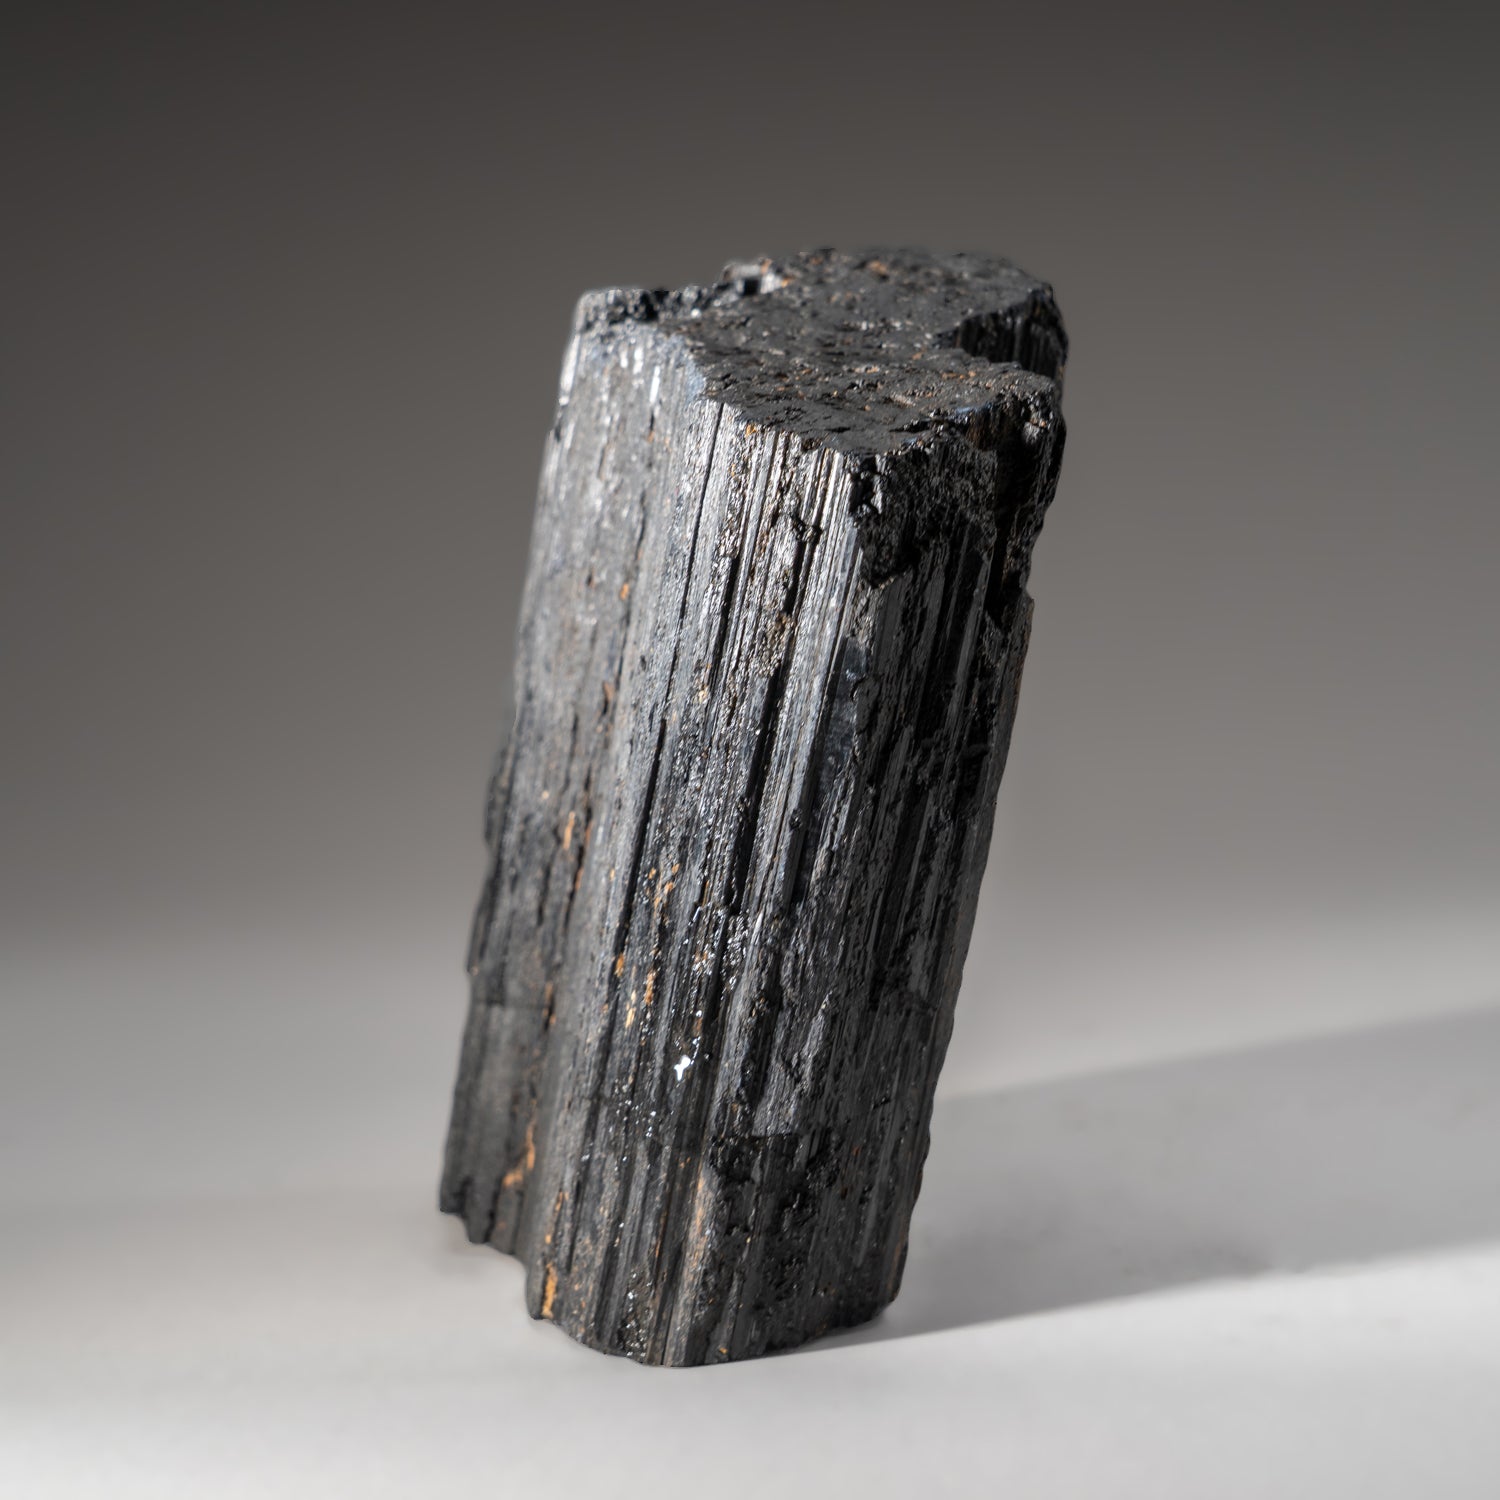 Genuine Black Tourmaline Crystal From Brazil (3.25 lbs)